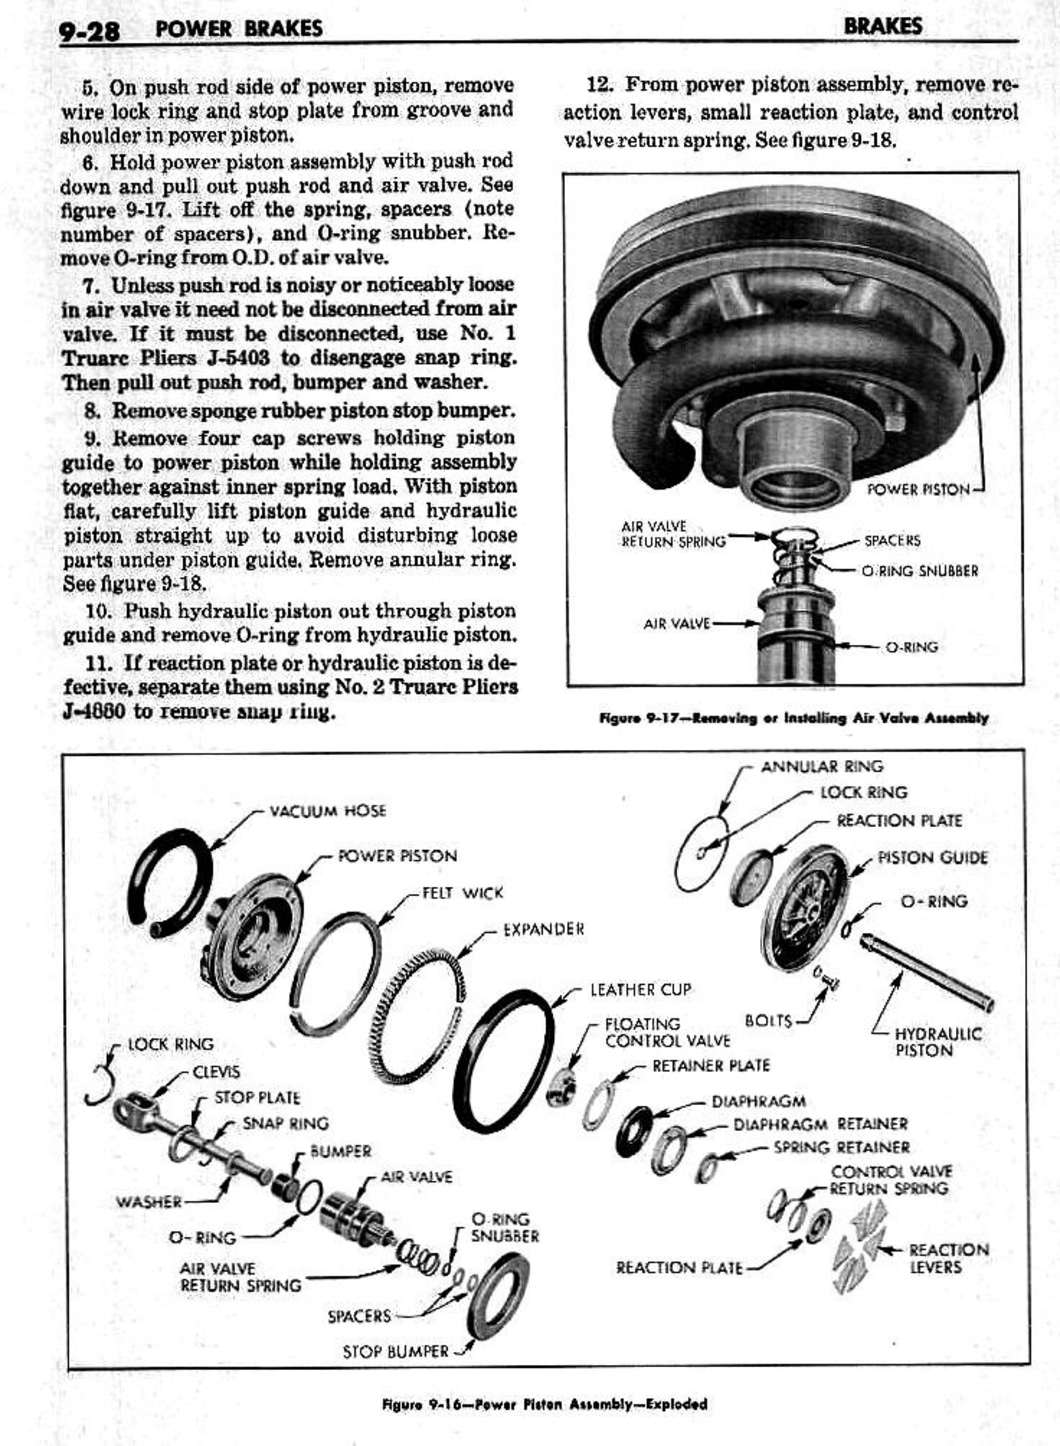 n_10 1959 Buick Shop Manual - Brakes-028-028.jpg